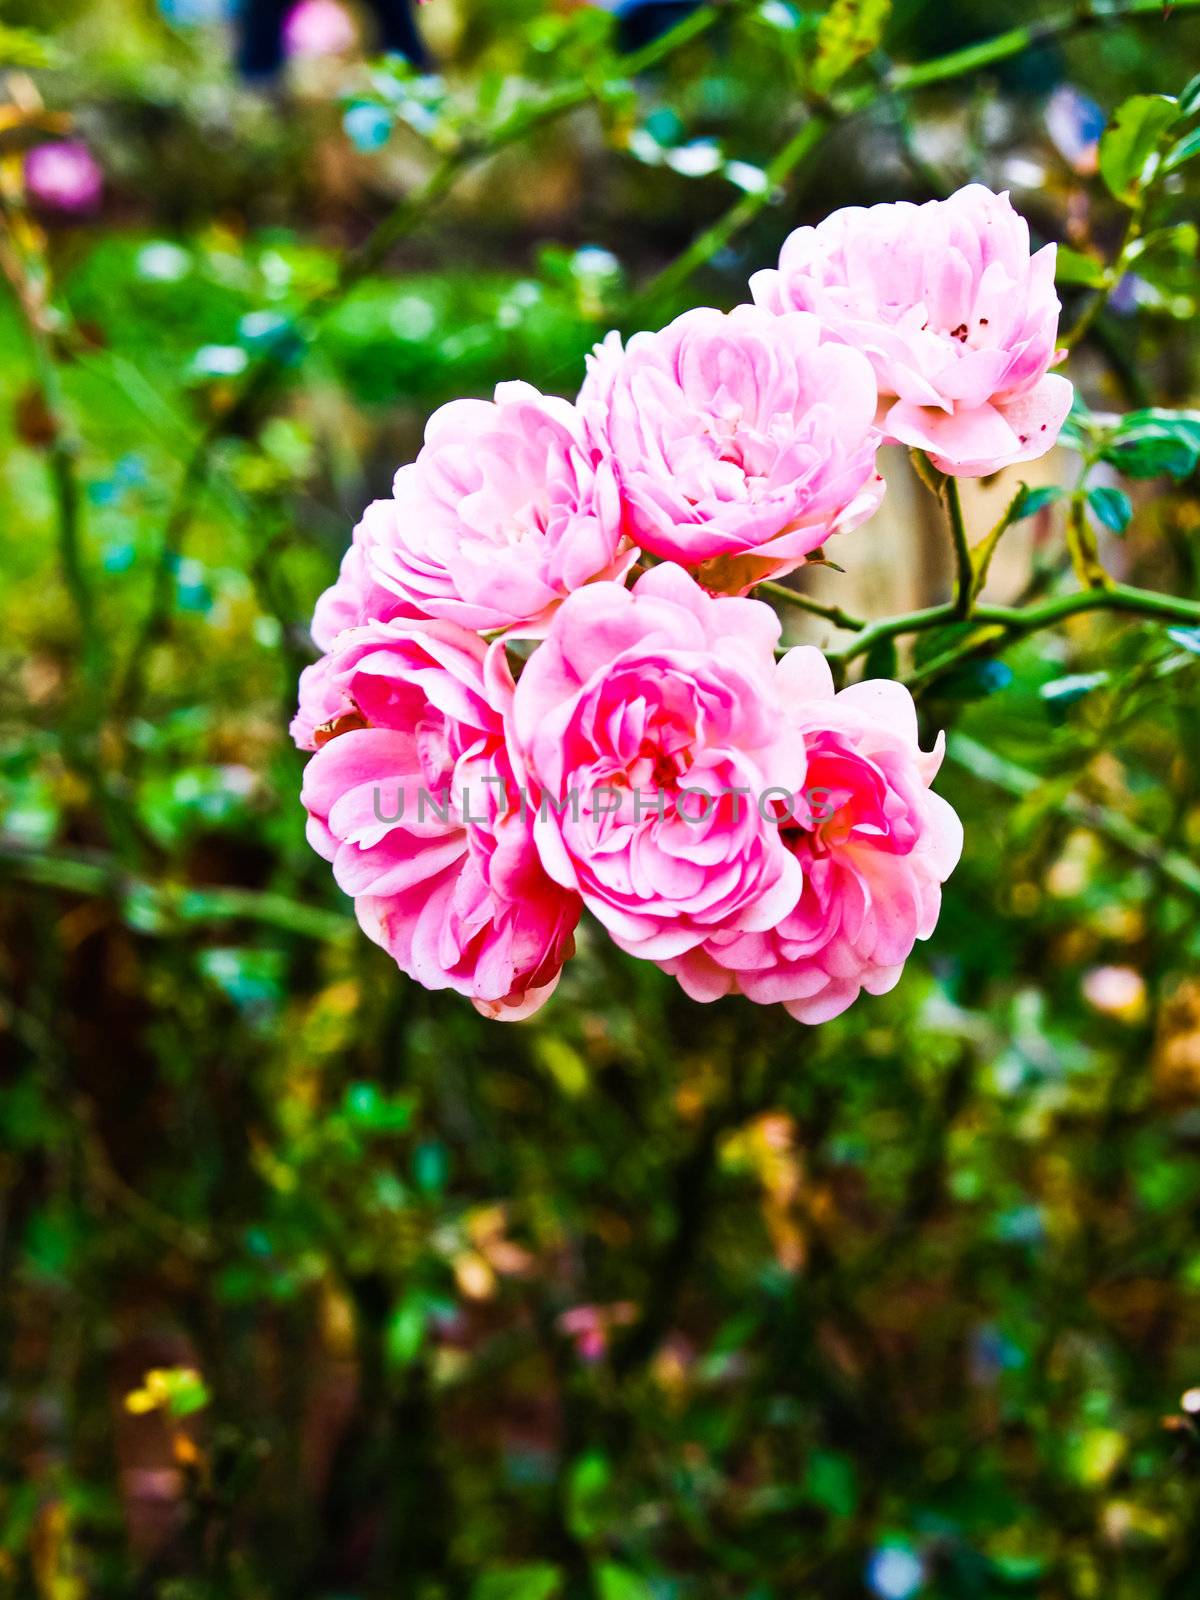 Pink fairy roses in nature by gururugu